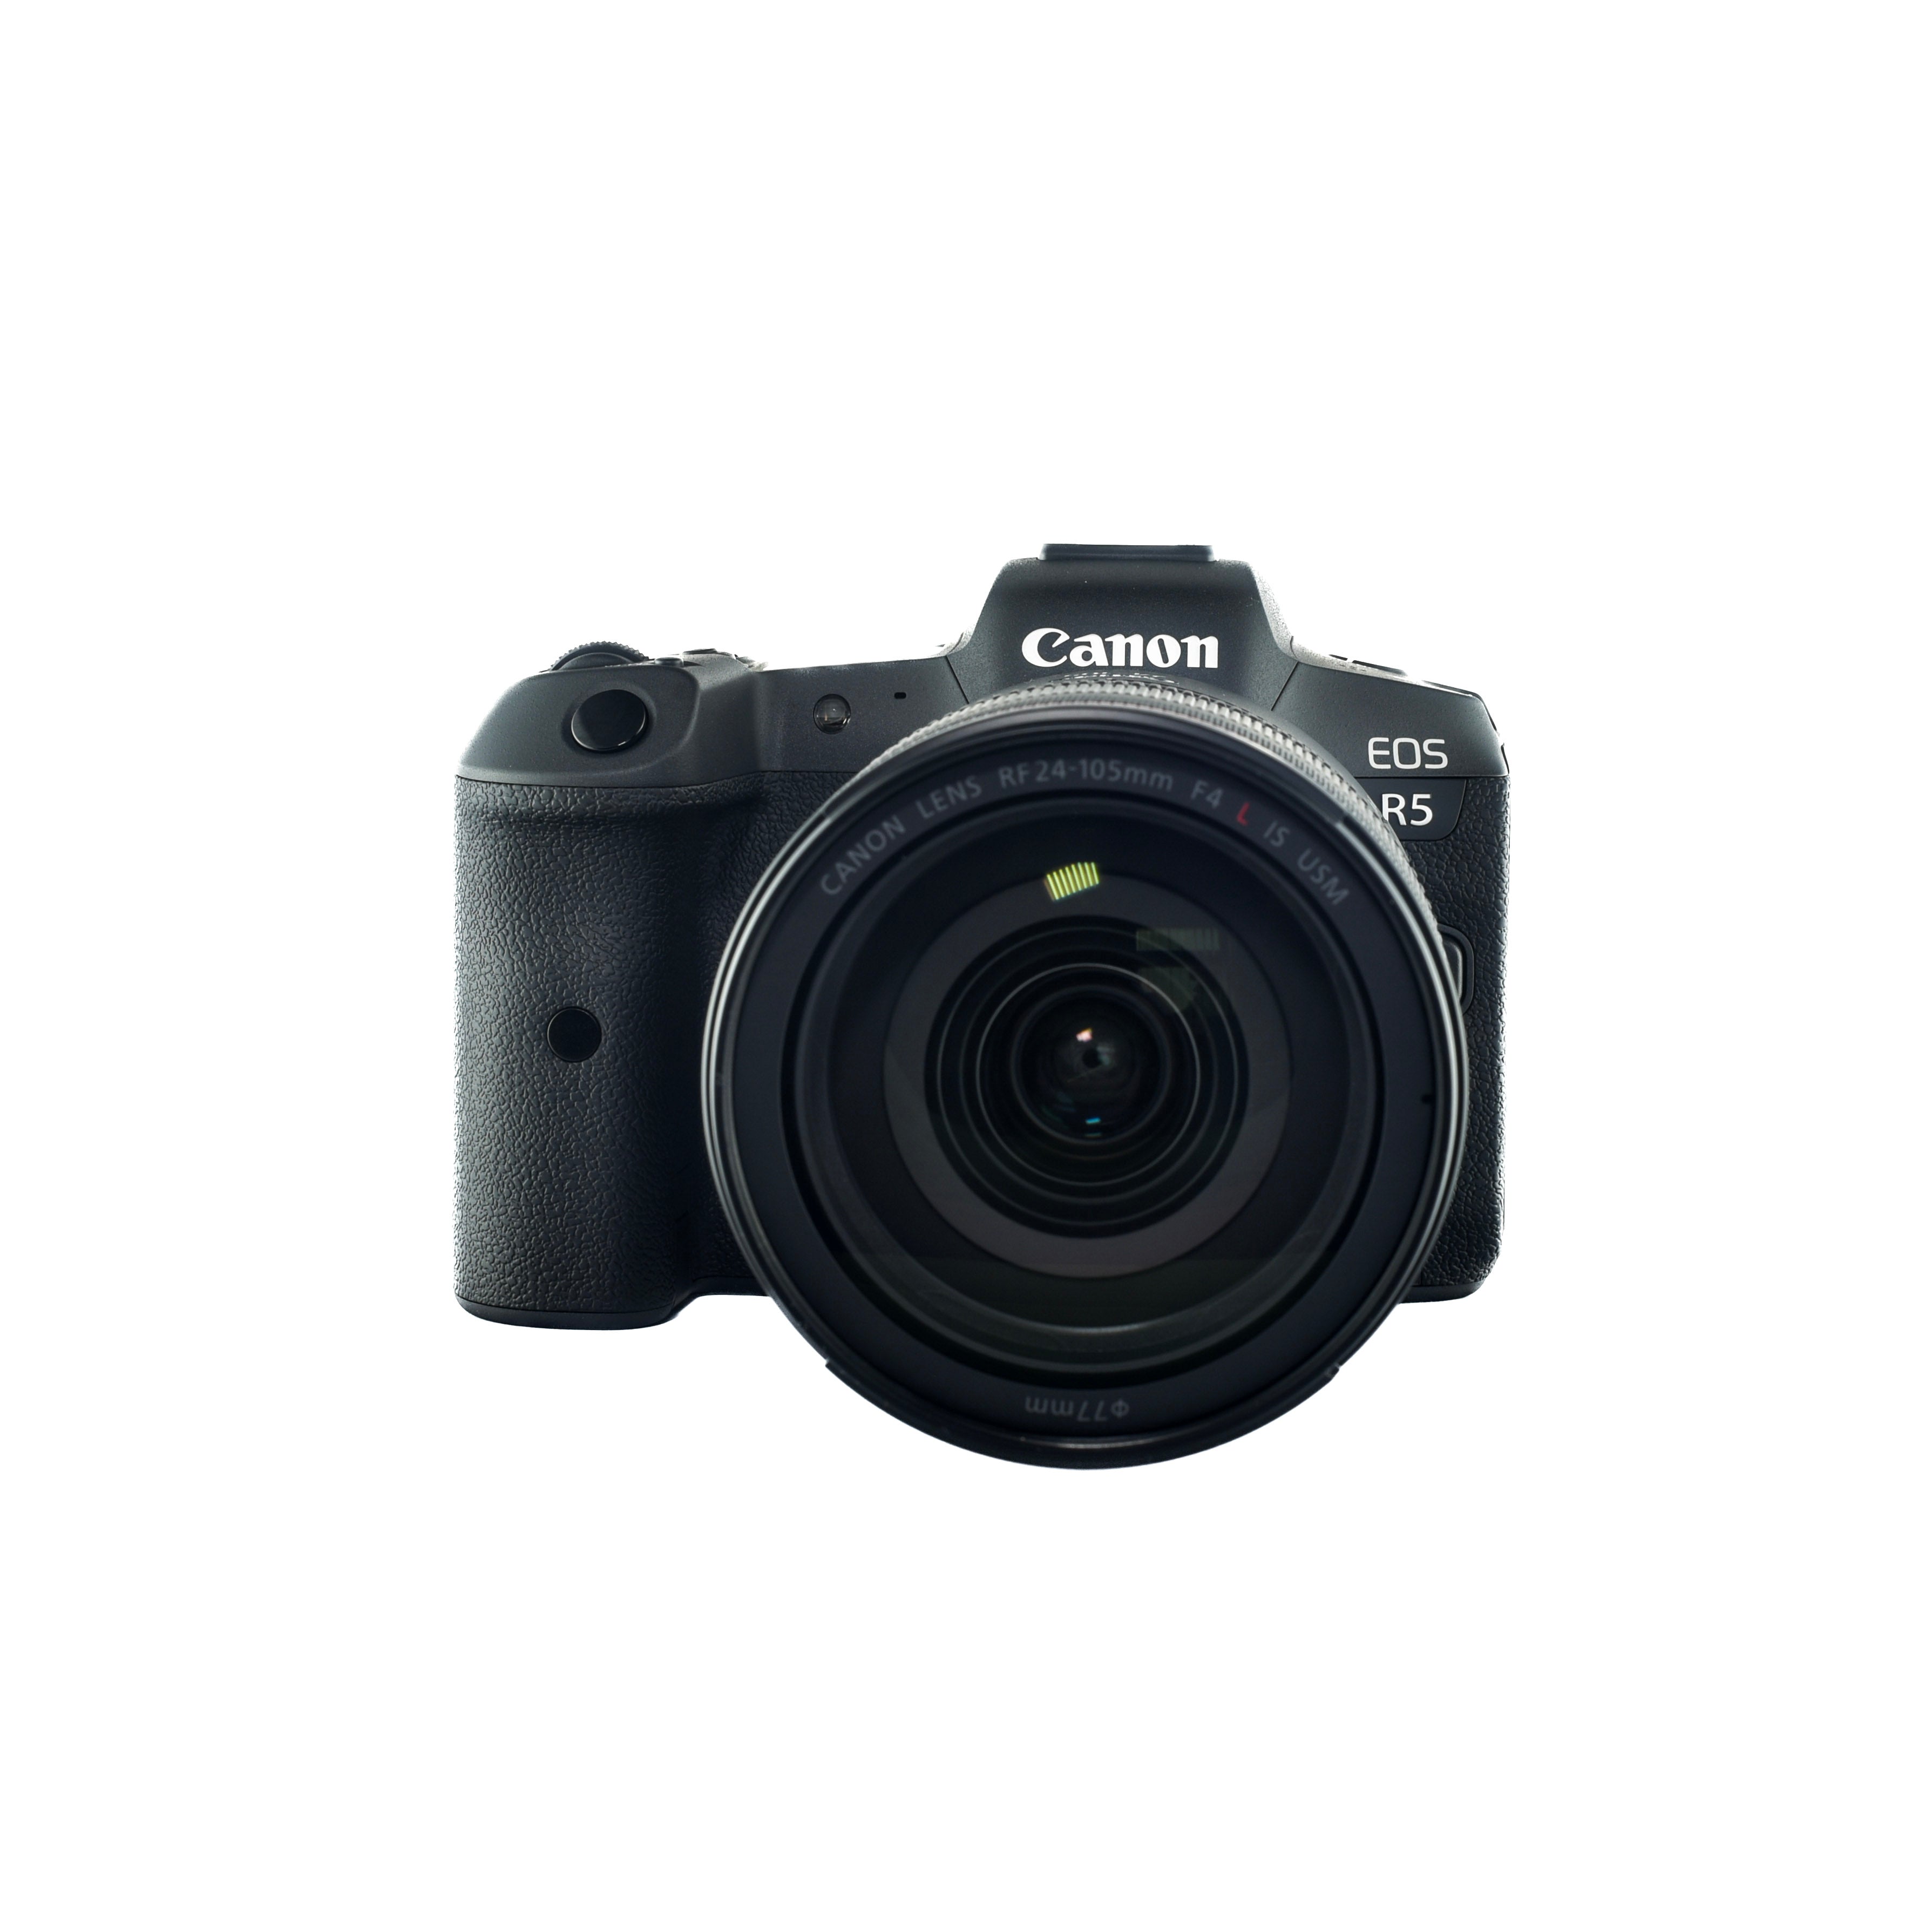 Canon Eos R5 Mirrorless Dslr Camera & 24-105mm f4 L IS USM lens